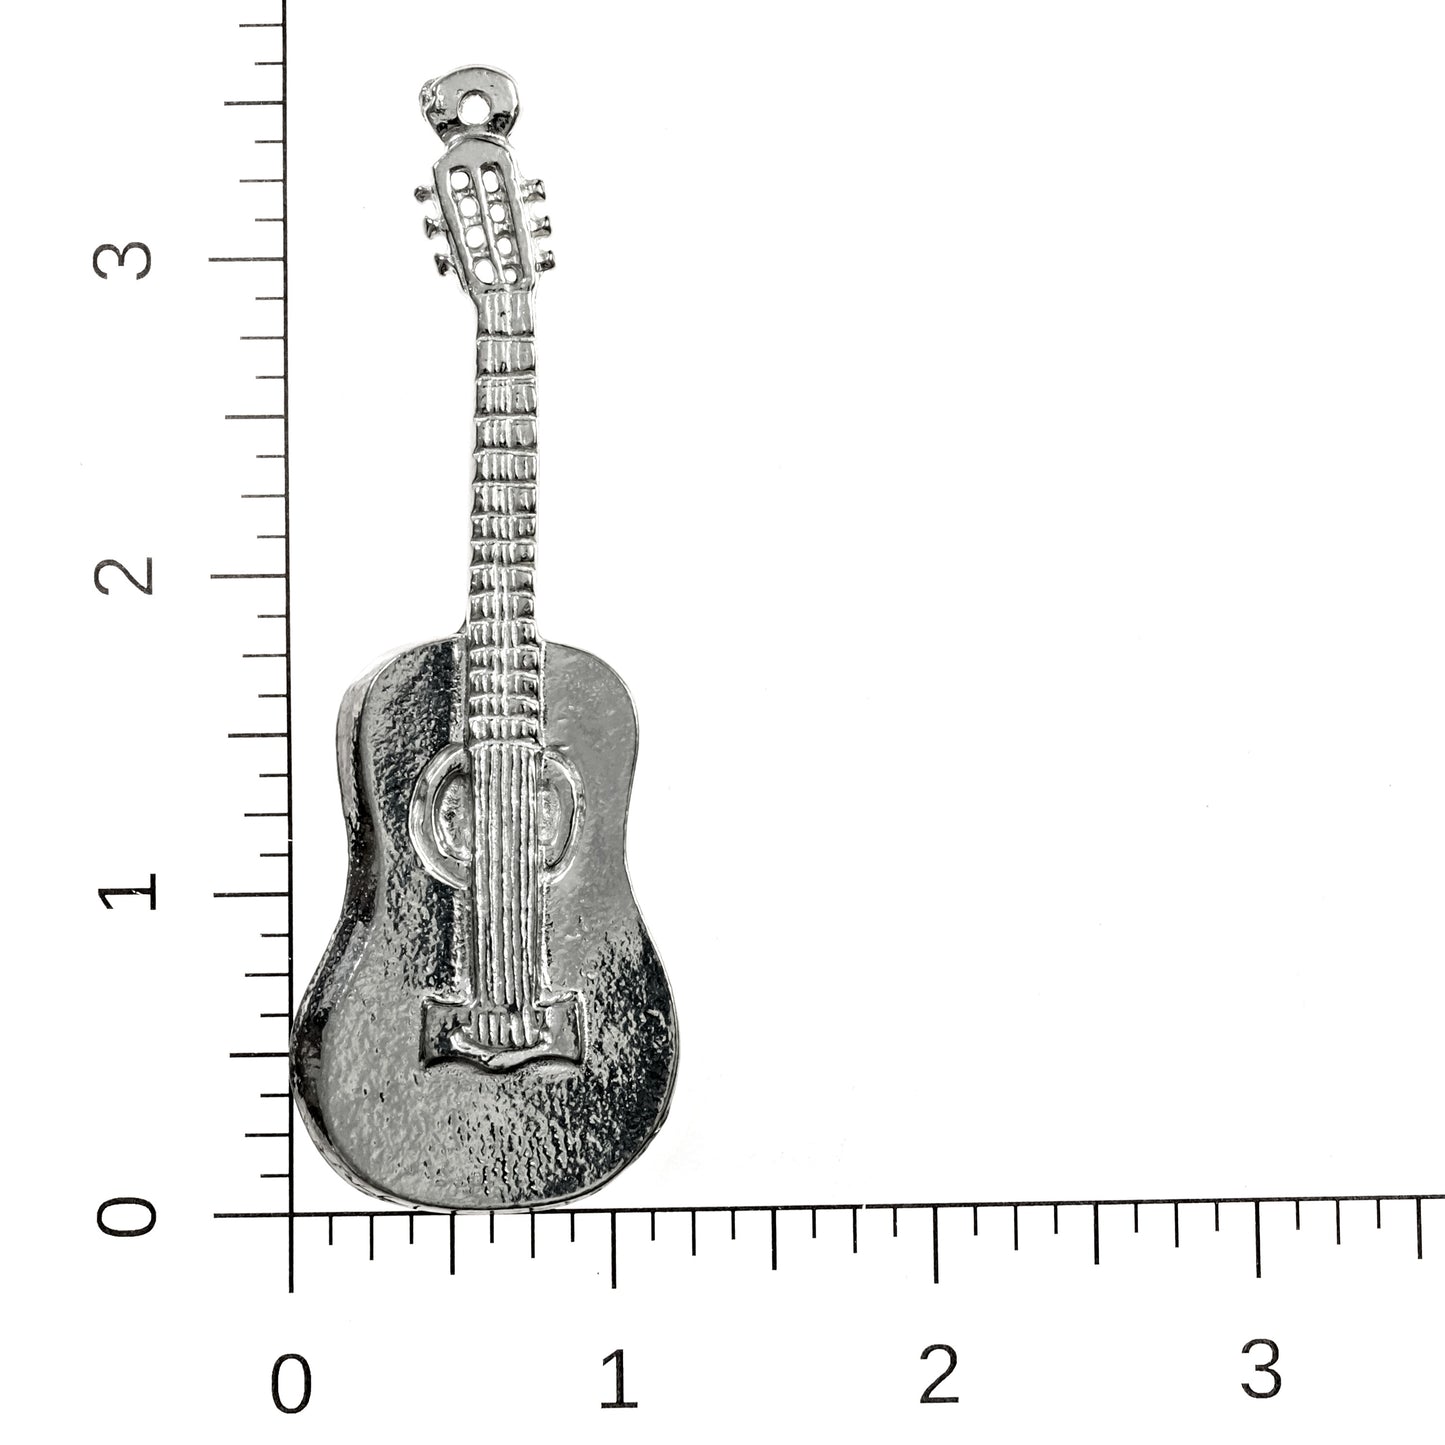 Guitar Gift - Guitar Christmas Ornament - Music Instrument Gift